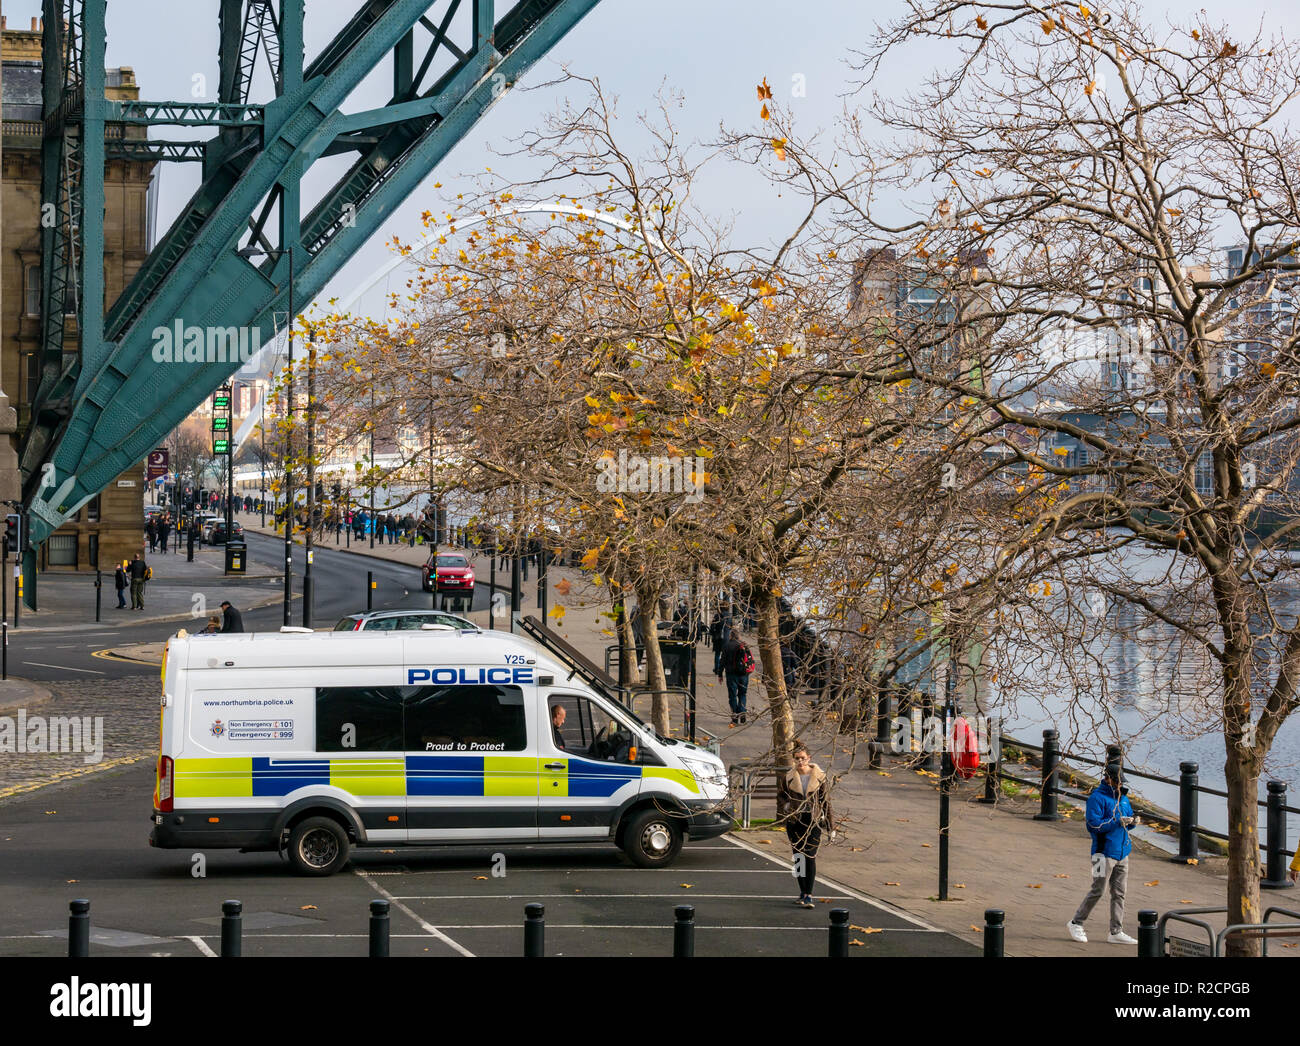 Polizei van unter Tyne Bridge, den Kai, Newcastle Upon Tyne, England, UK geparkt Stockfoto